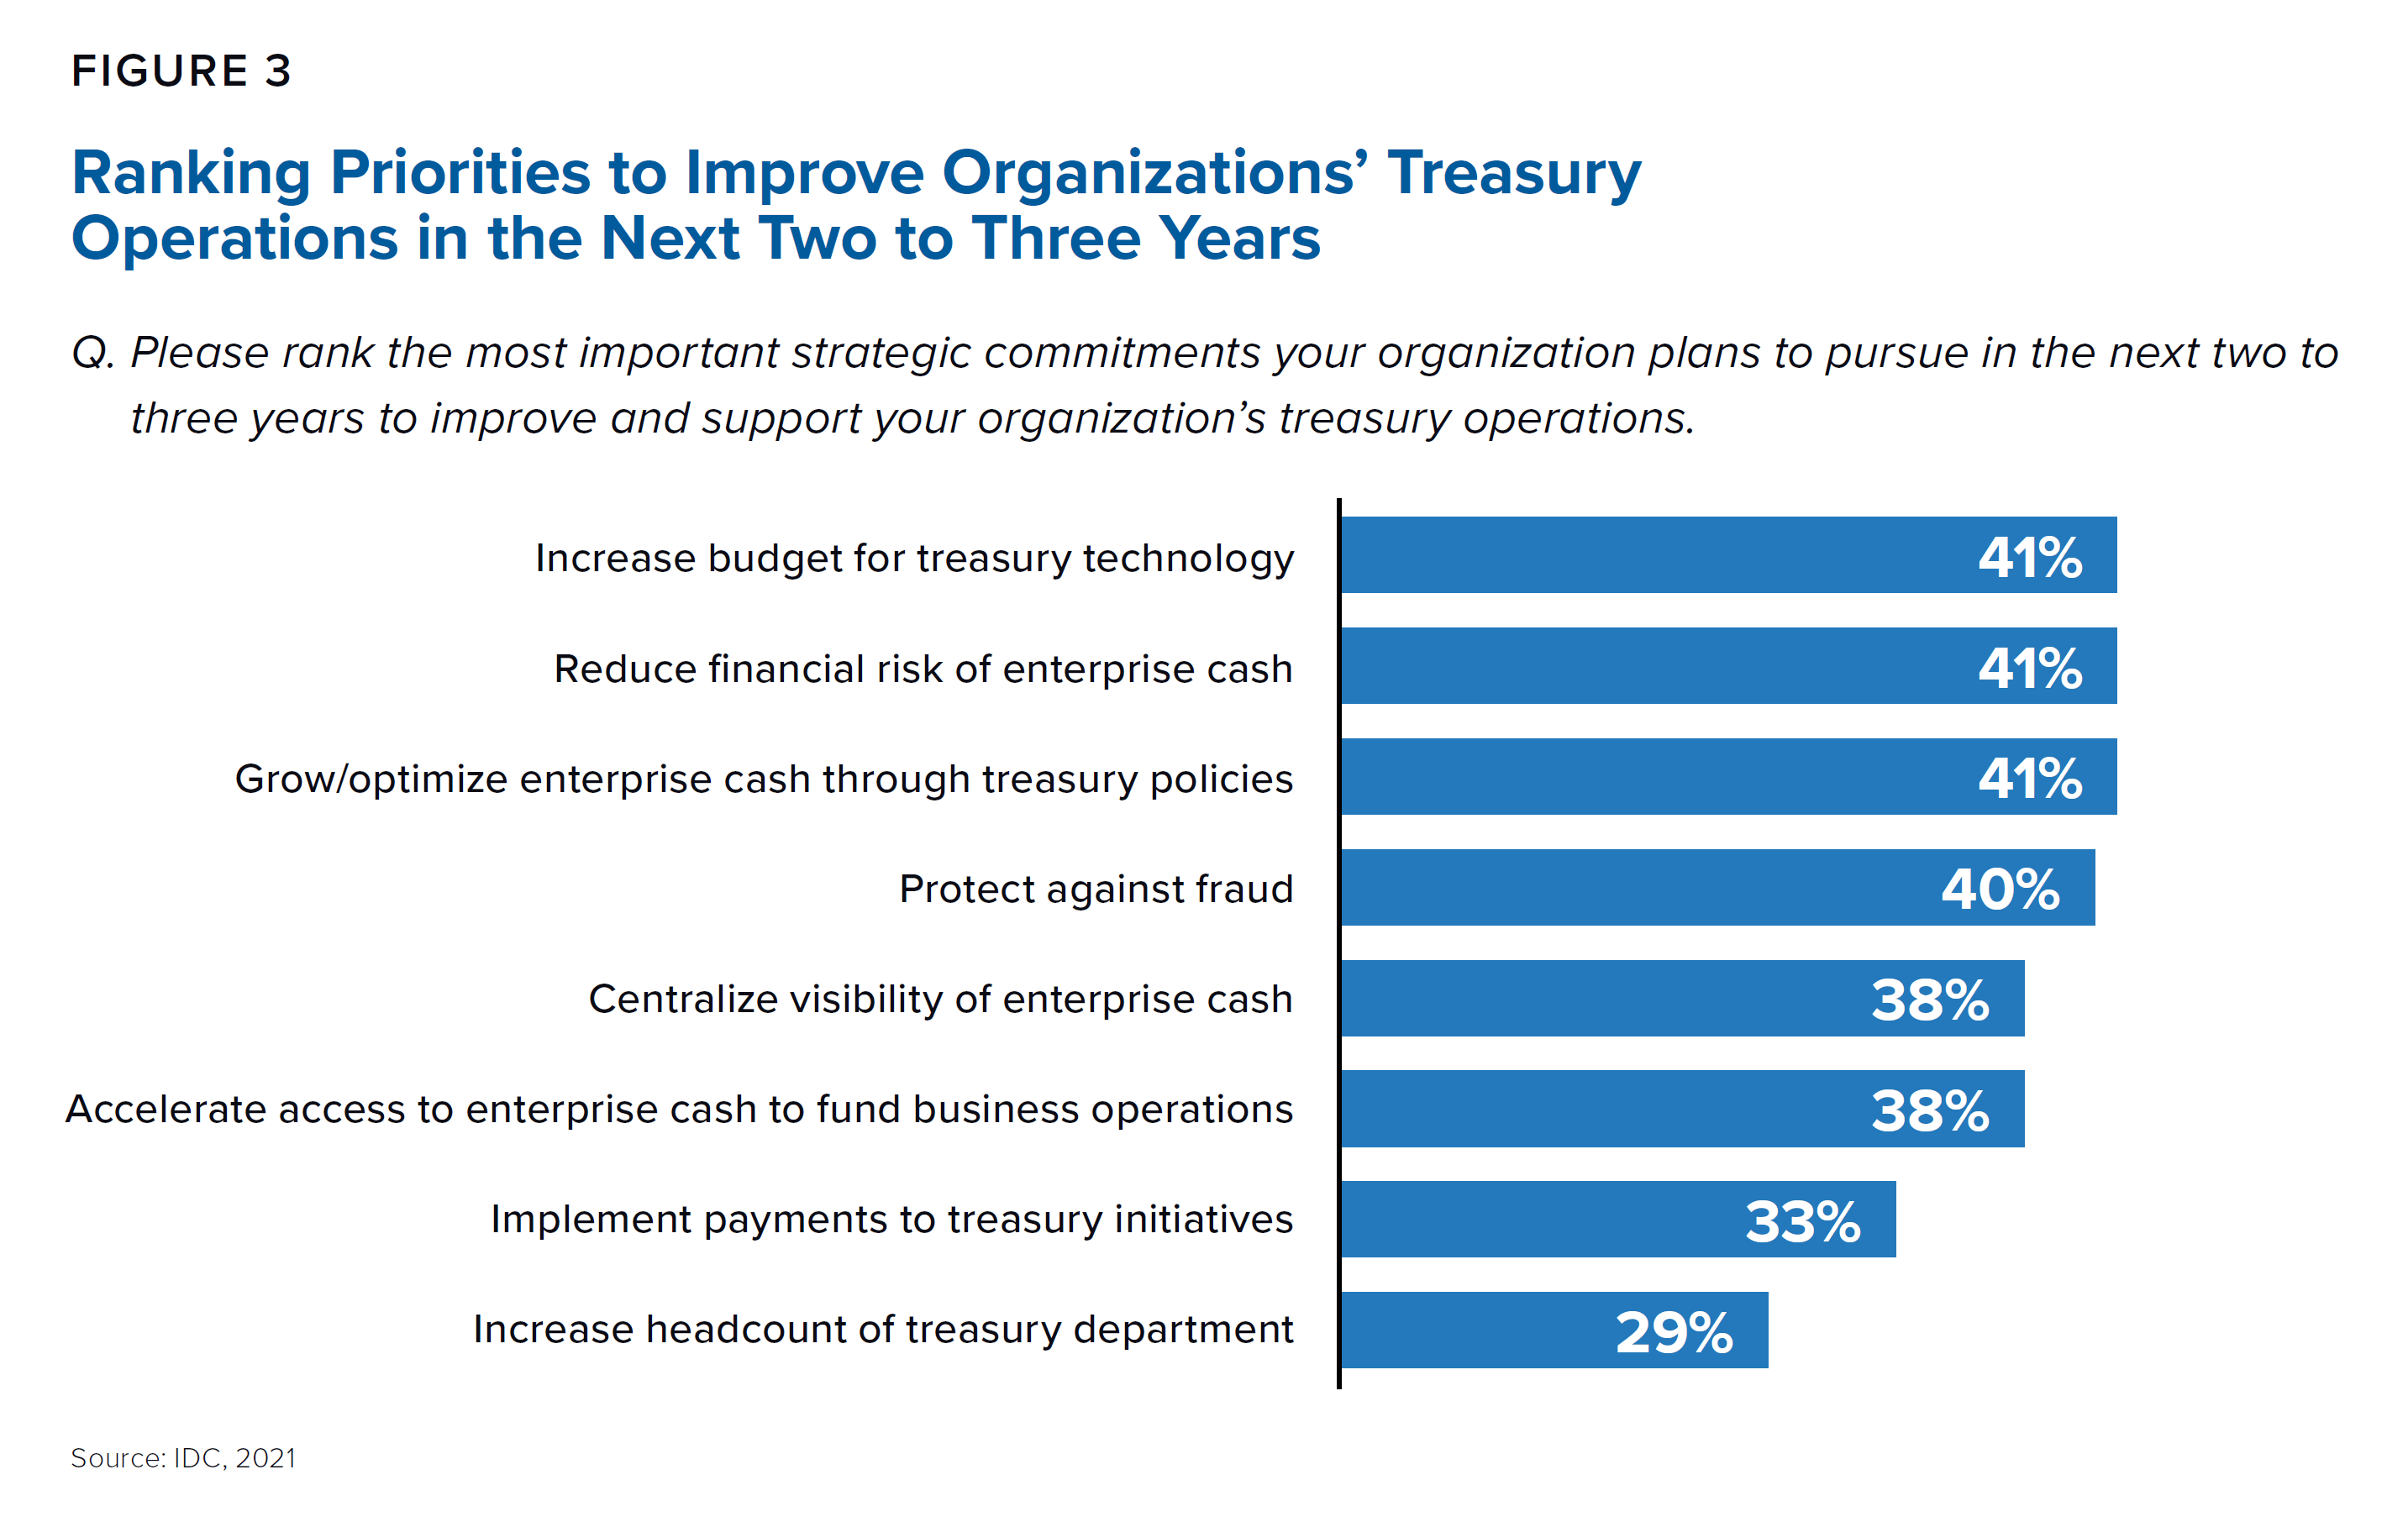 Ranking Priorities to Improve Organizations' Treasury Operations 